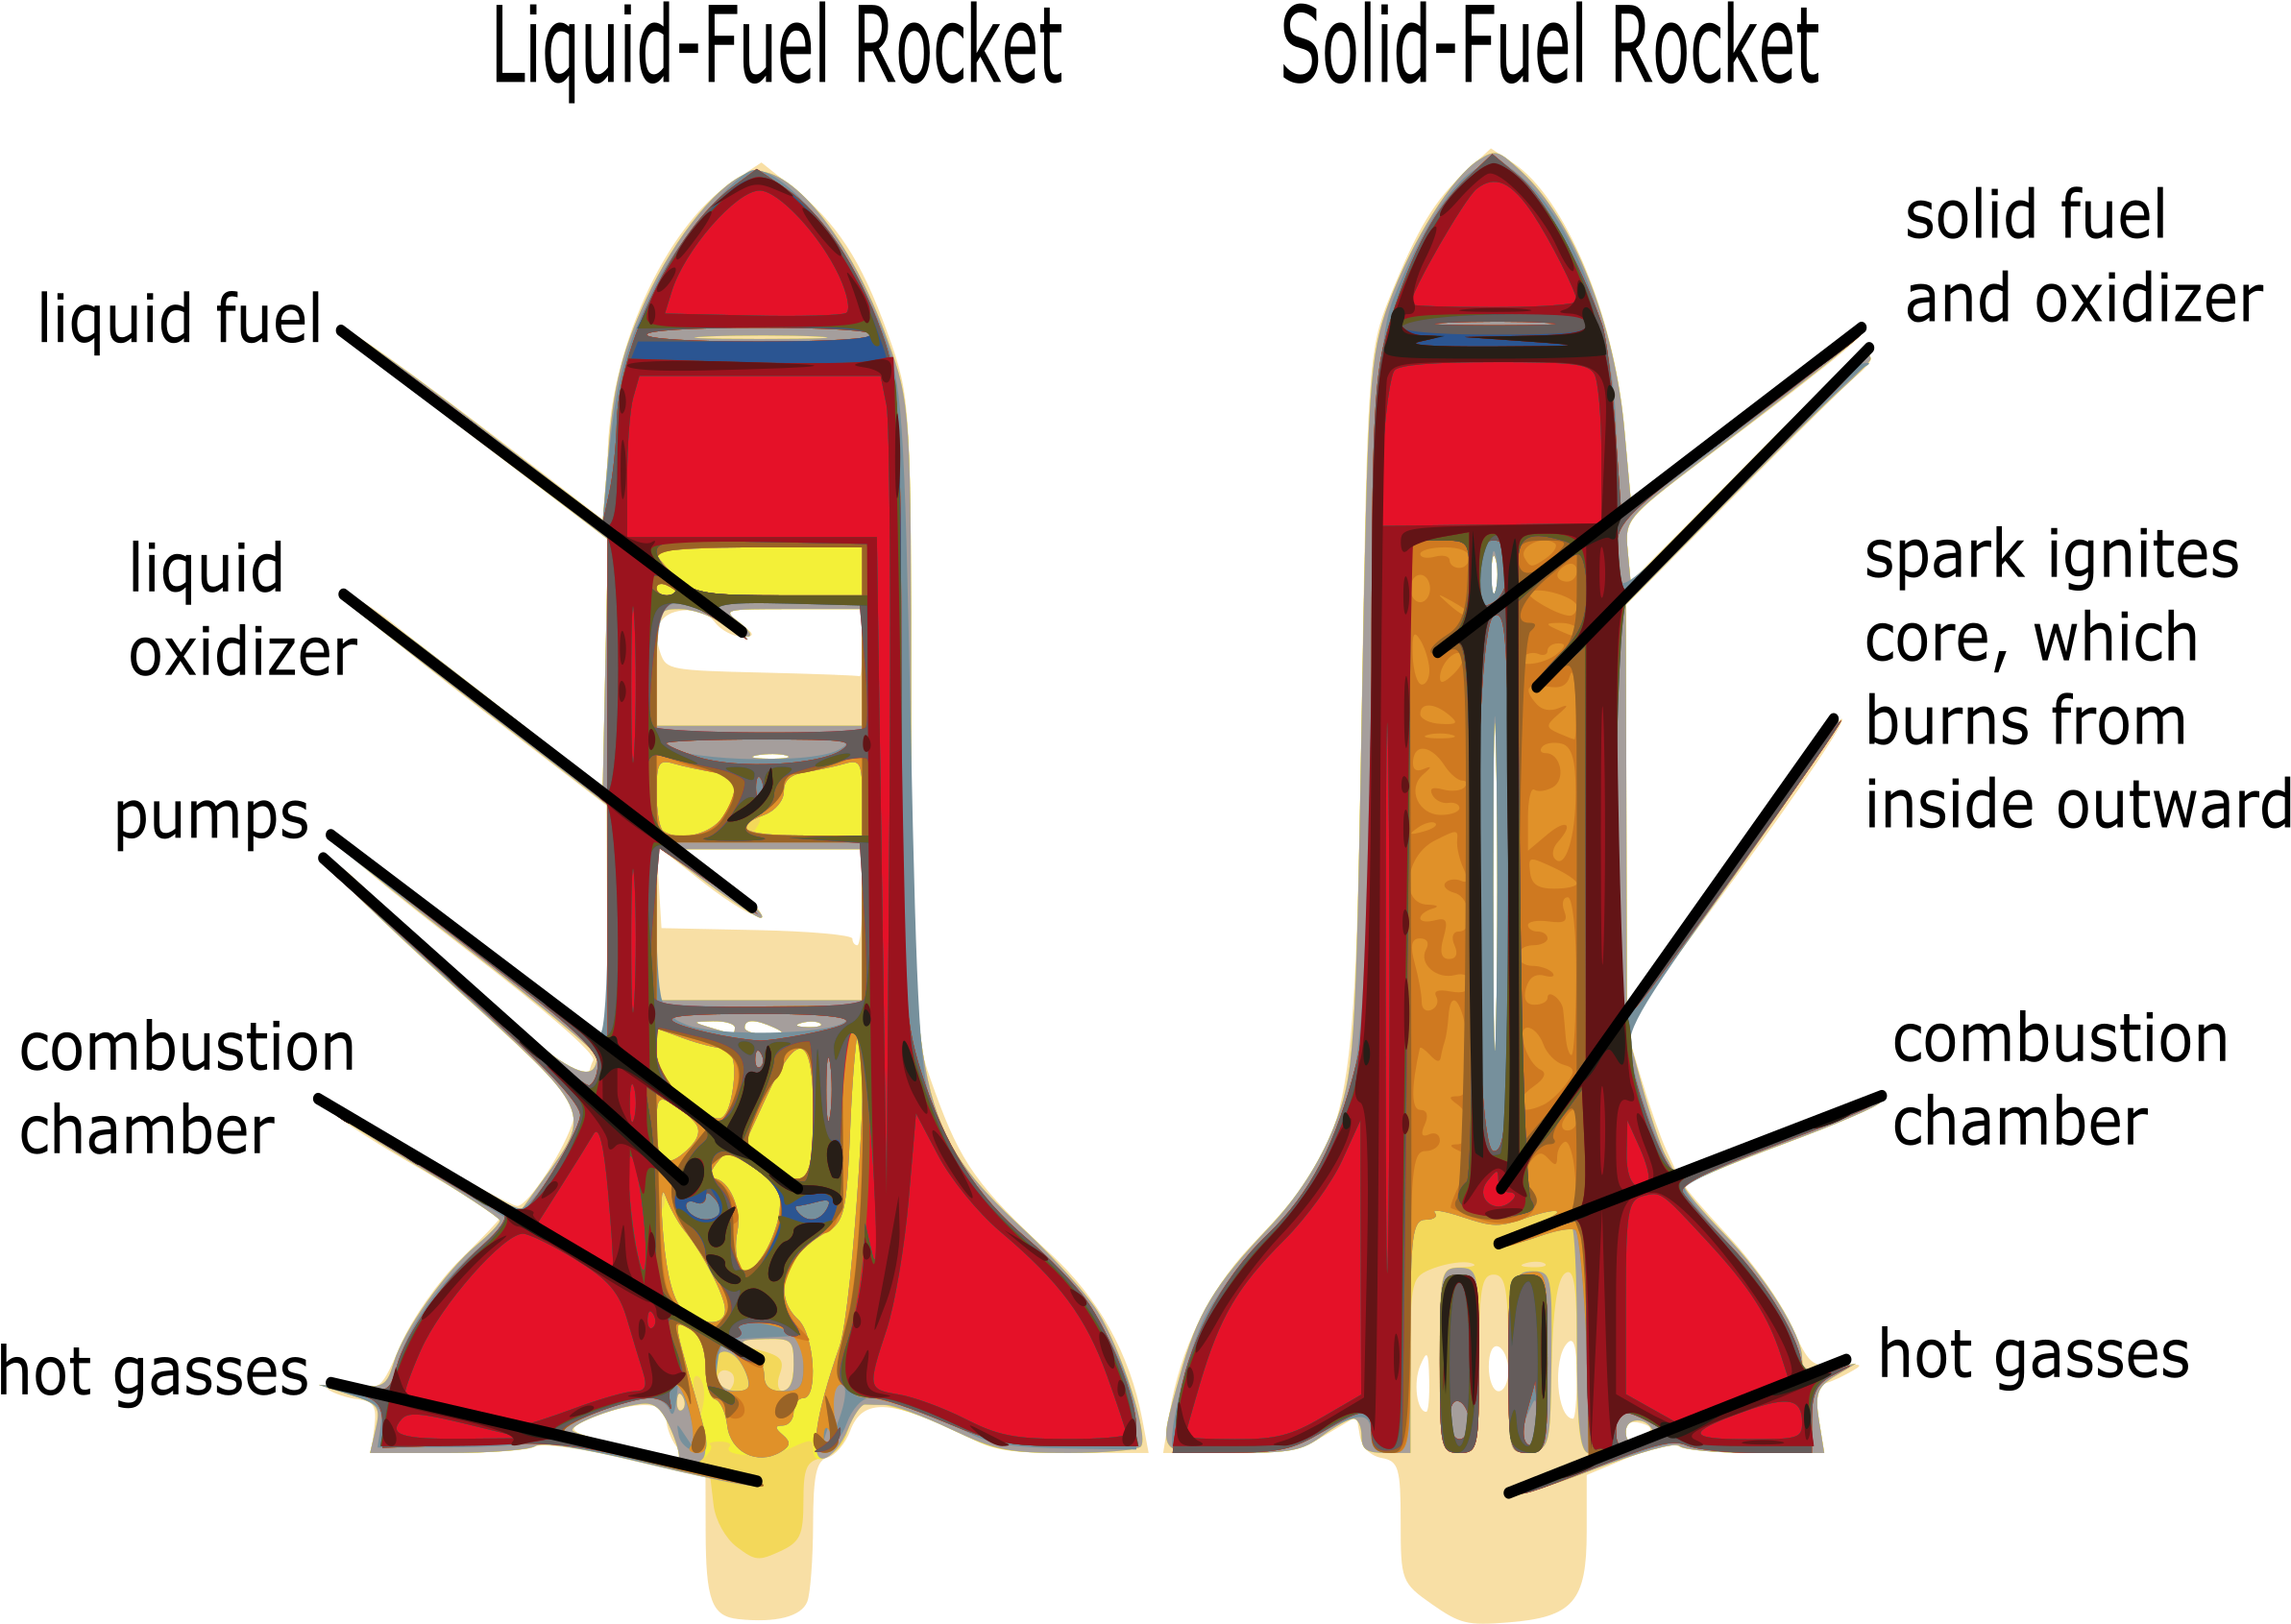 Big Image - Rocket Diagram With Labels (2400x1726)